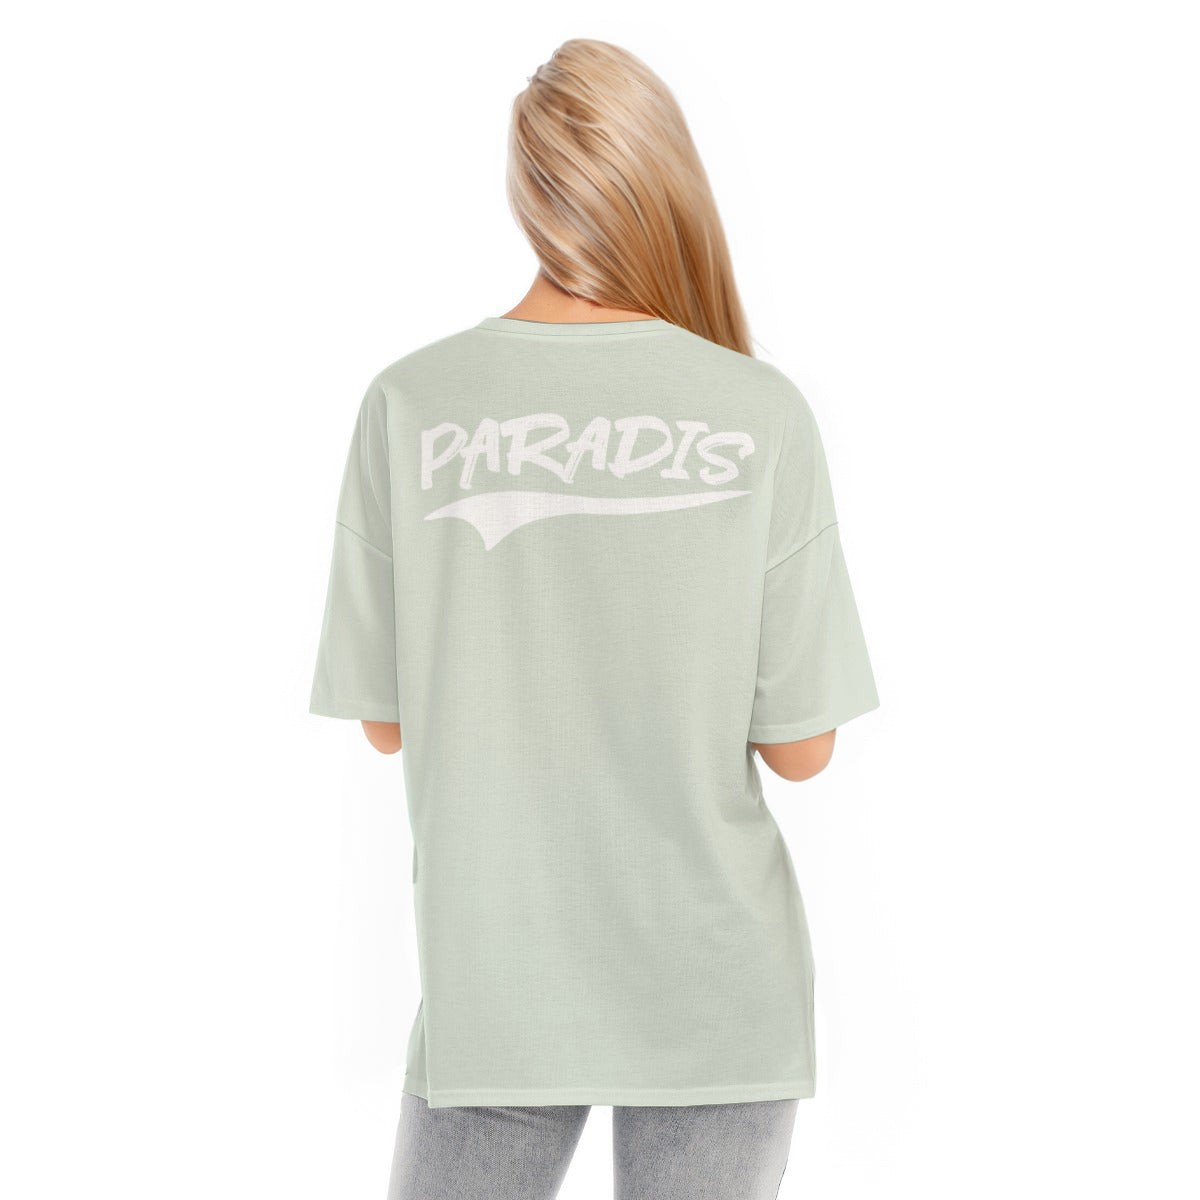 Load image into Gallery viewer, PARADIS - Pastel Lime T-shirt - Hem Split | T-SHIRT | PARADIS SVP
